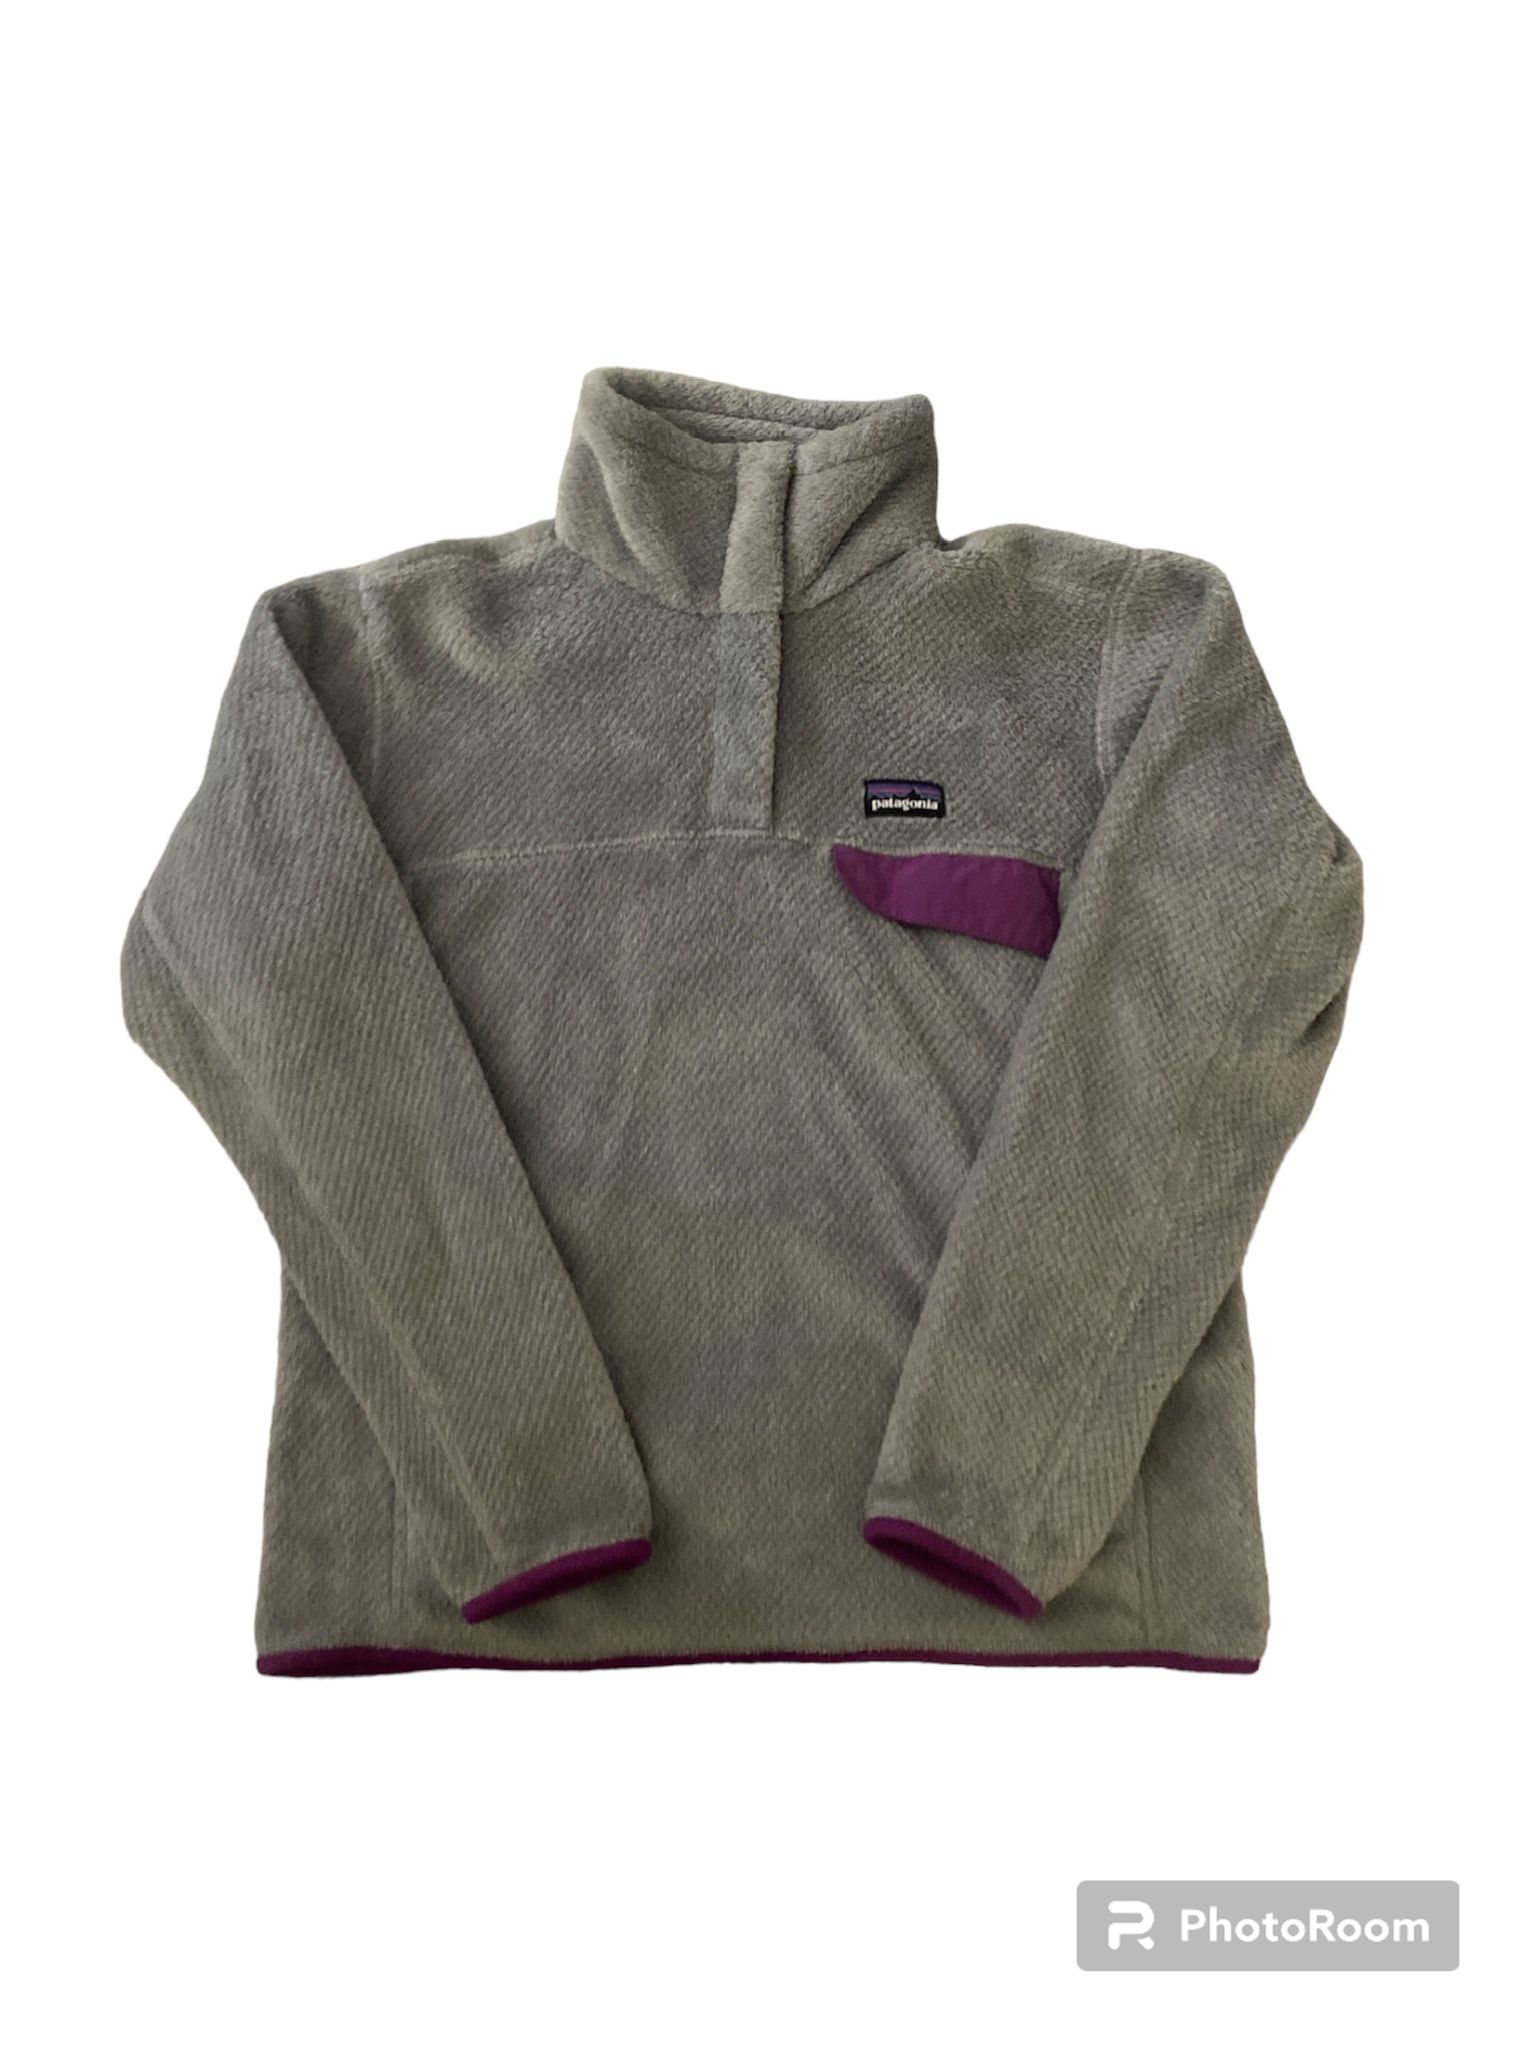 Patagonia Women's Snap-T Gray/Purple Fleece Pullover Jacket Size M